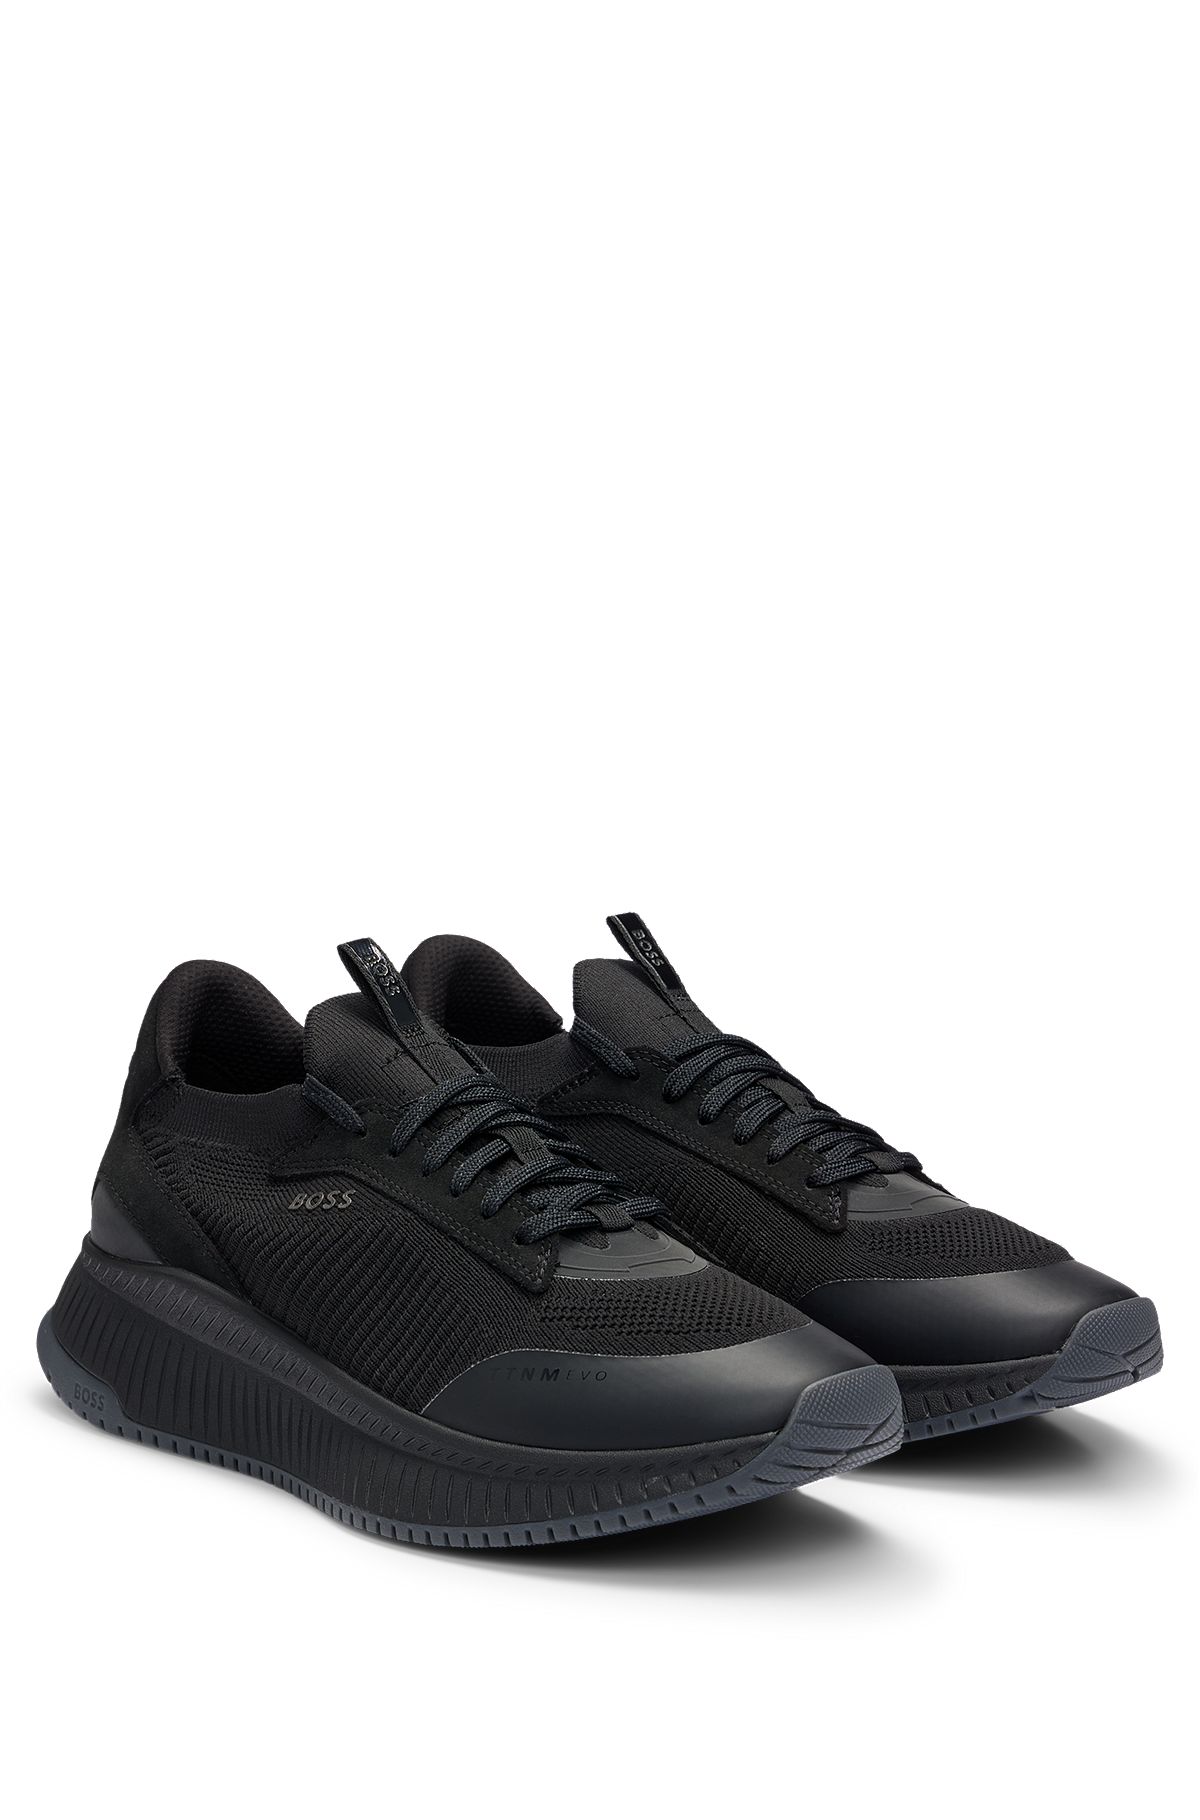 BOSS Zapatillas Rusham Lowp negro - Tienda Esdemarca calzado, moda